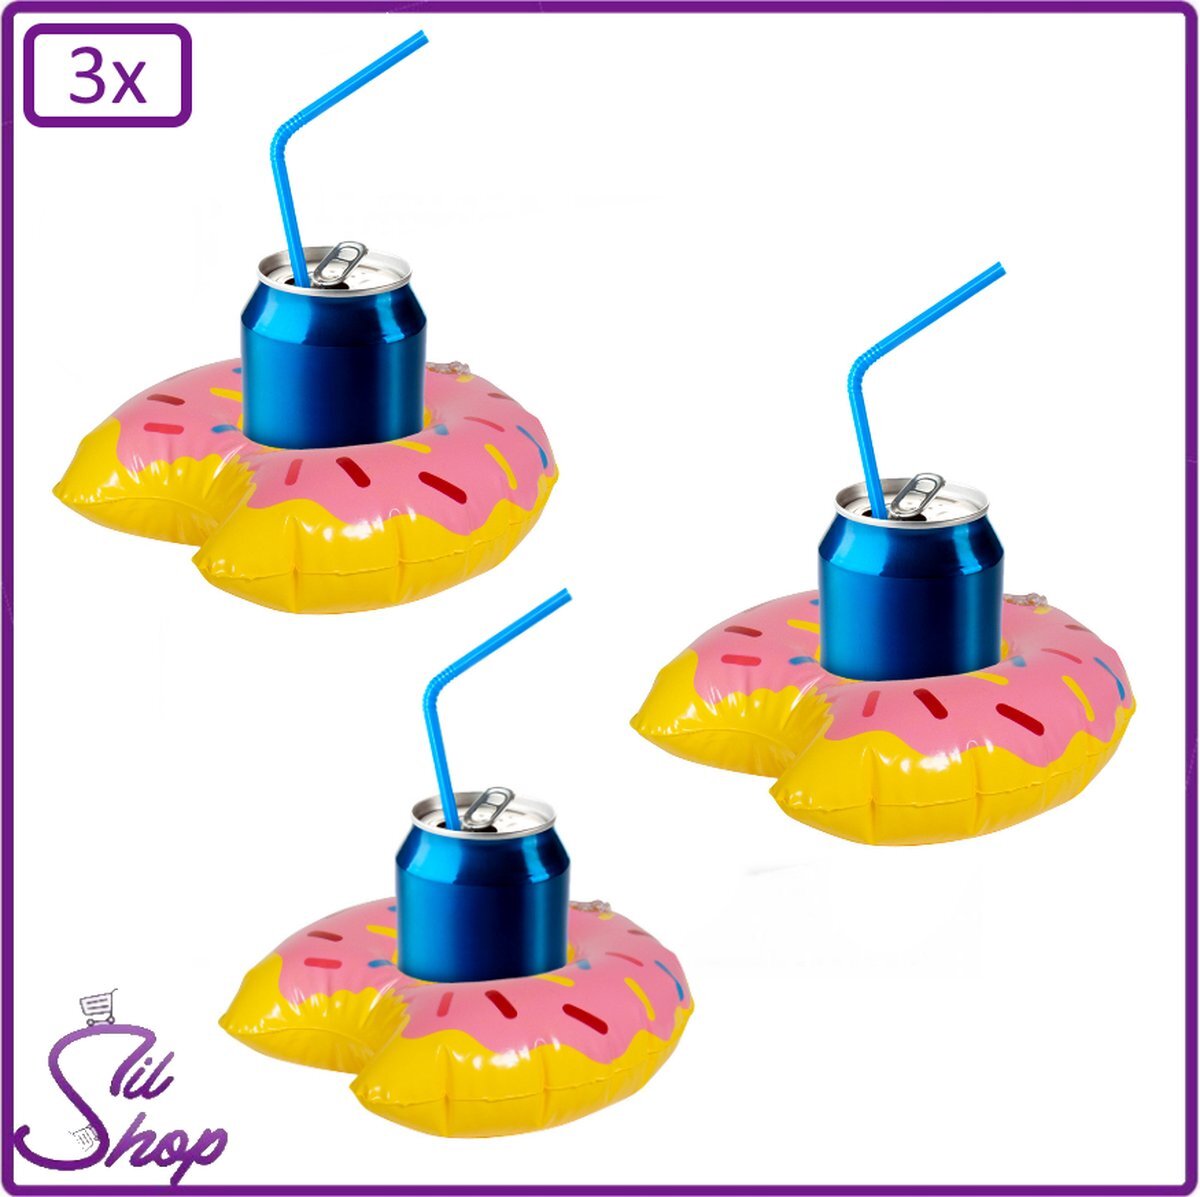 SilShop 3x Opblaasbare bekerhouder donut 13 x 20 cm geel-roze - Beker Houder Drijven Water Zwembad